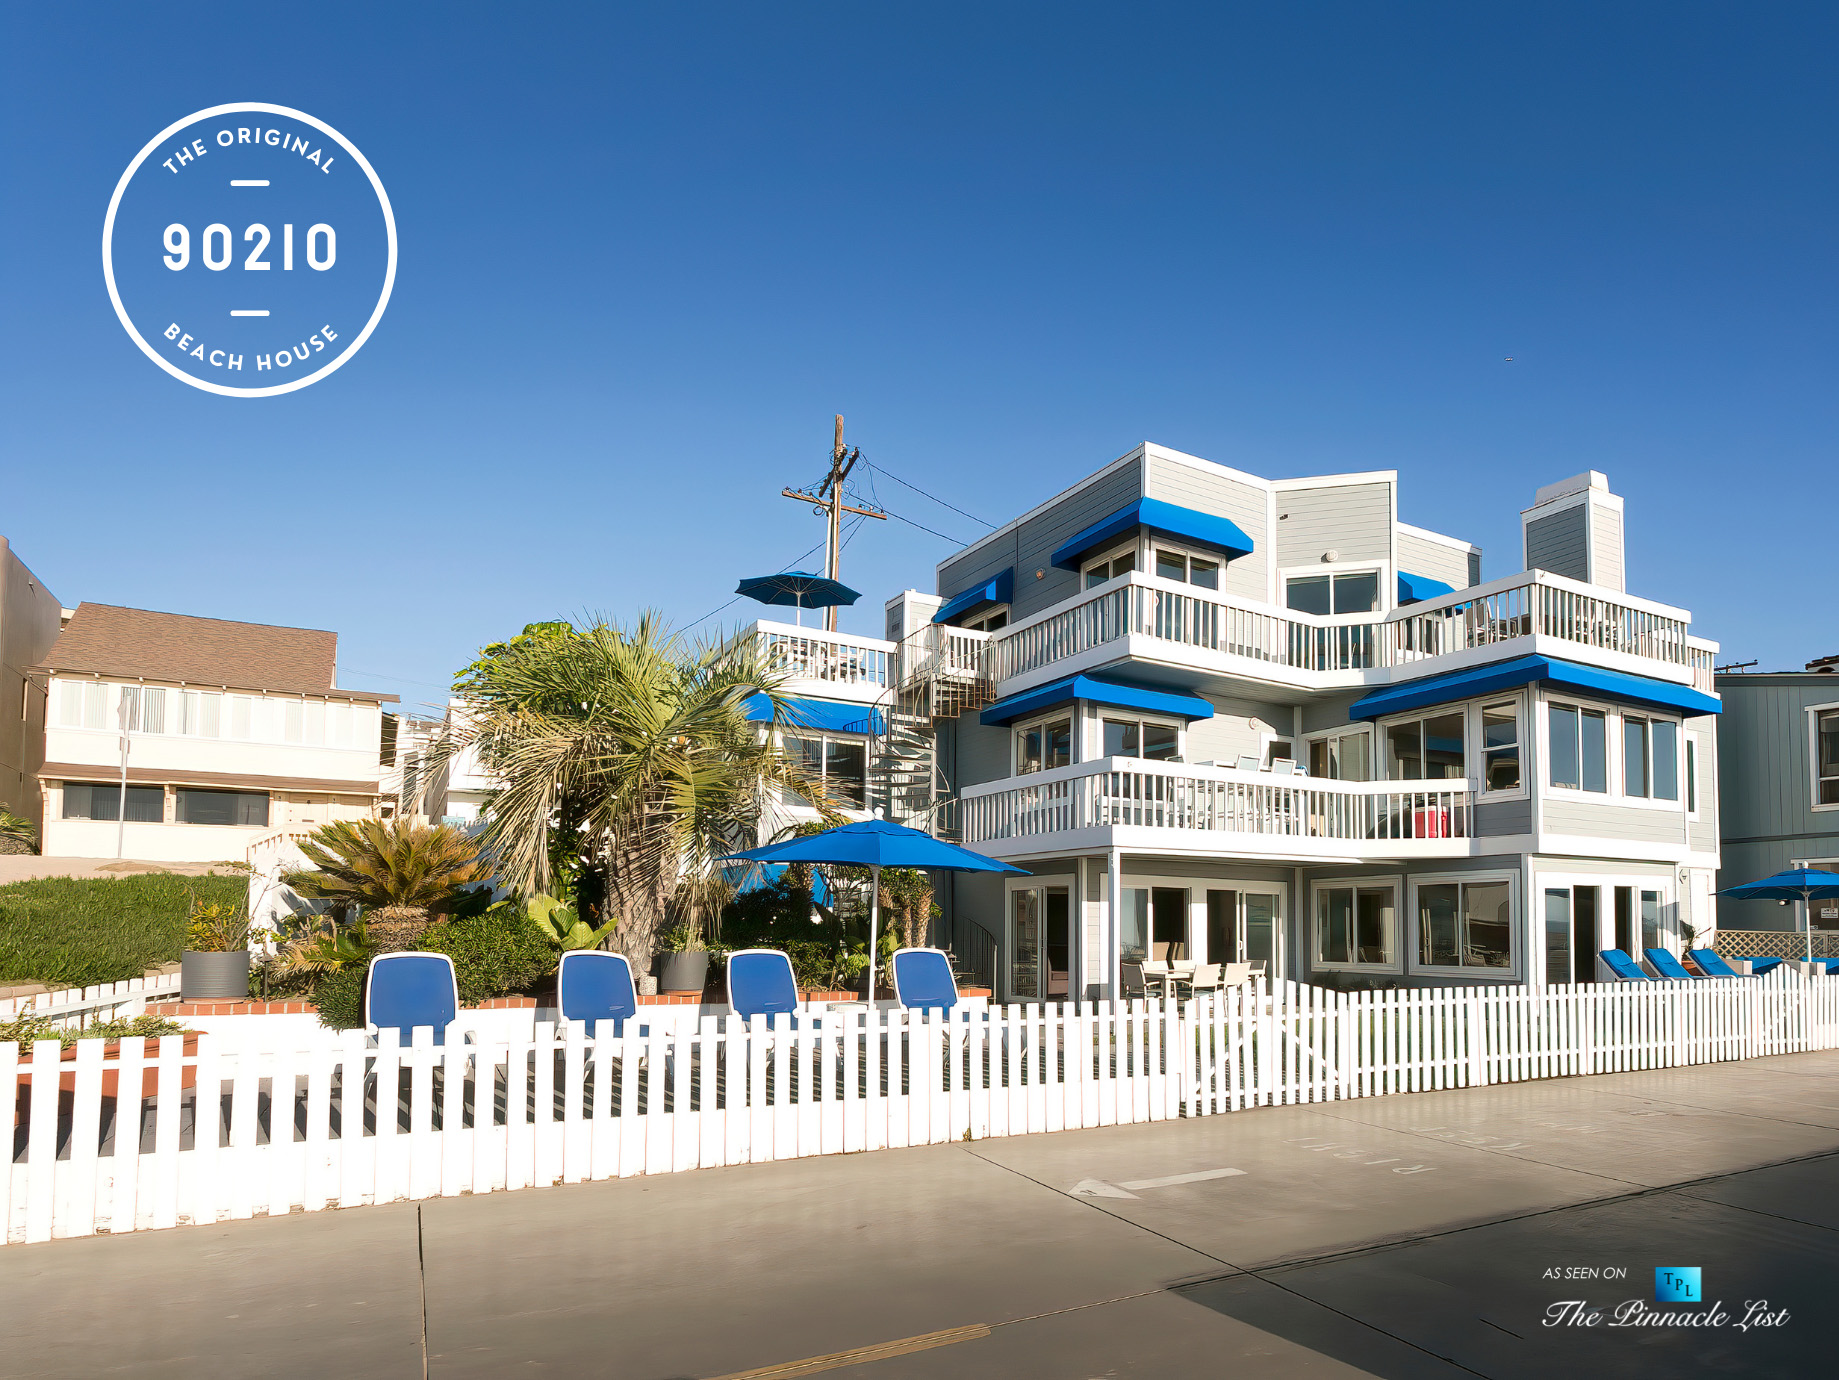 The Original 90210 Beach House - 3500 The Strand, Hermosa Beach, CA, USA - Front View